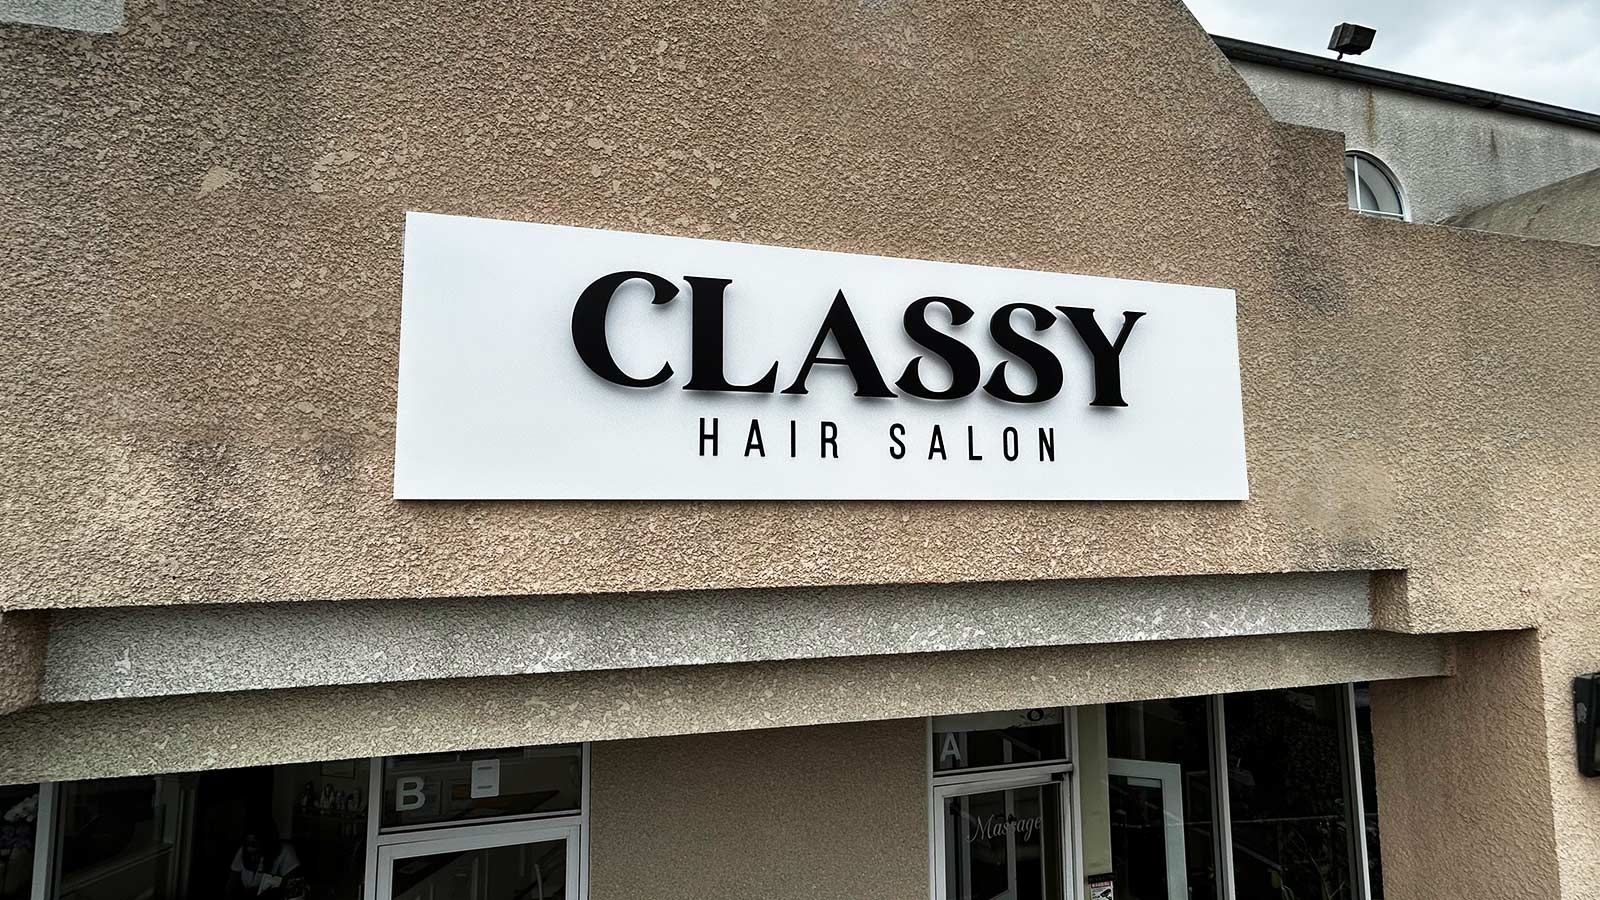 Classy Hair Salon modern sign mounted on the facade